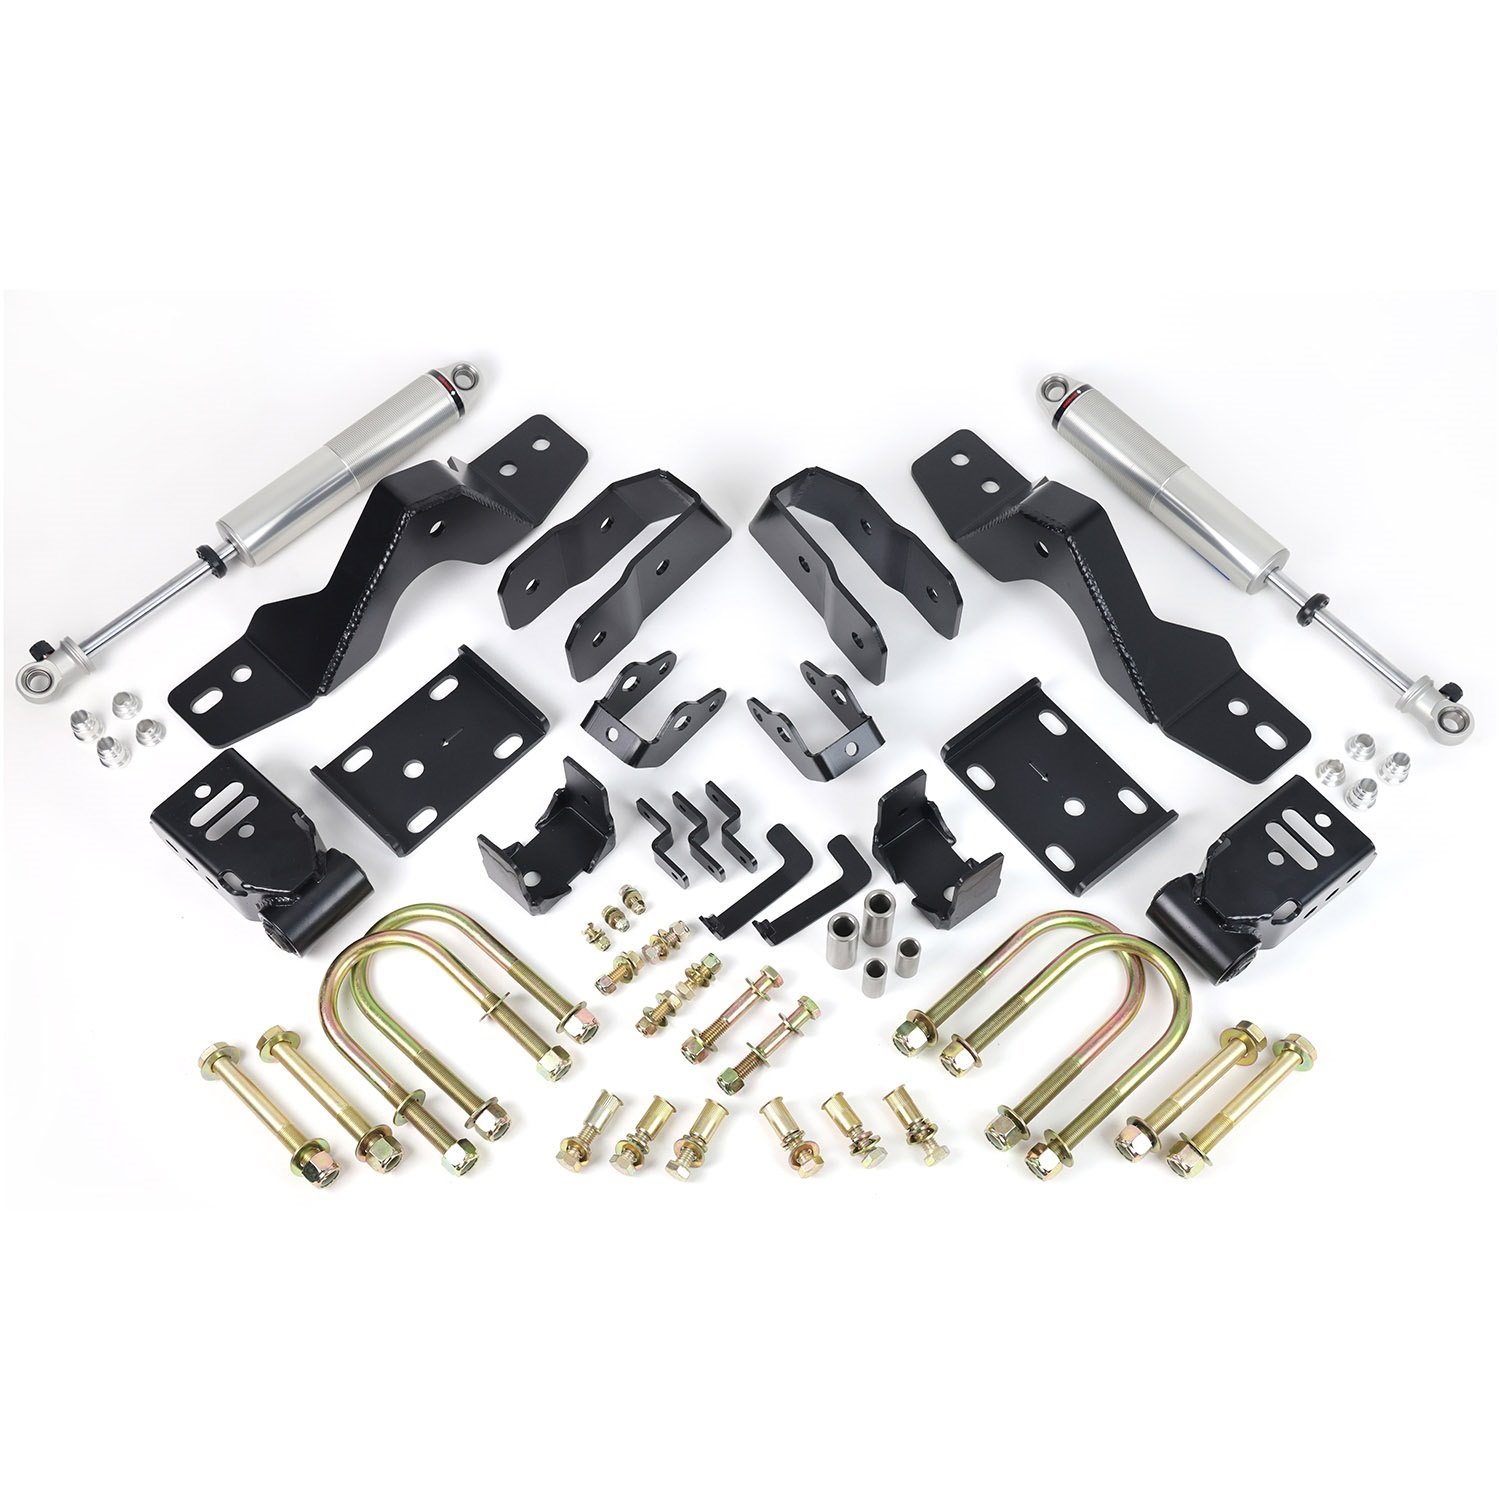 Rear Suspension Lowering Kit Fits Select Chevy Silverado,